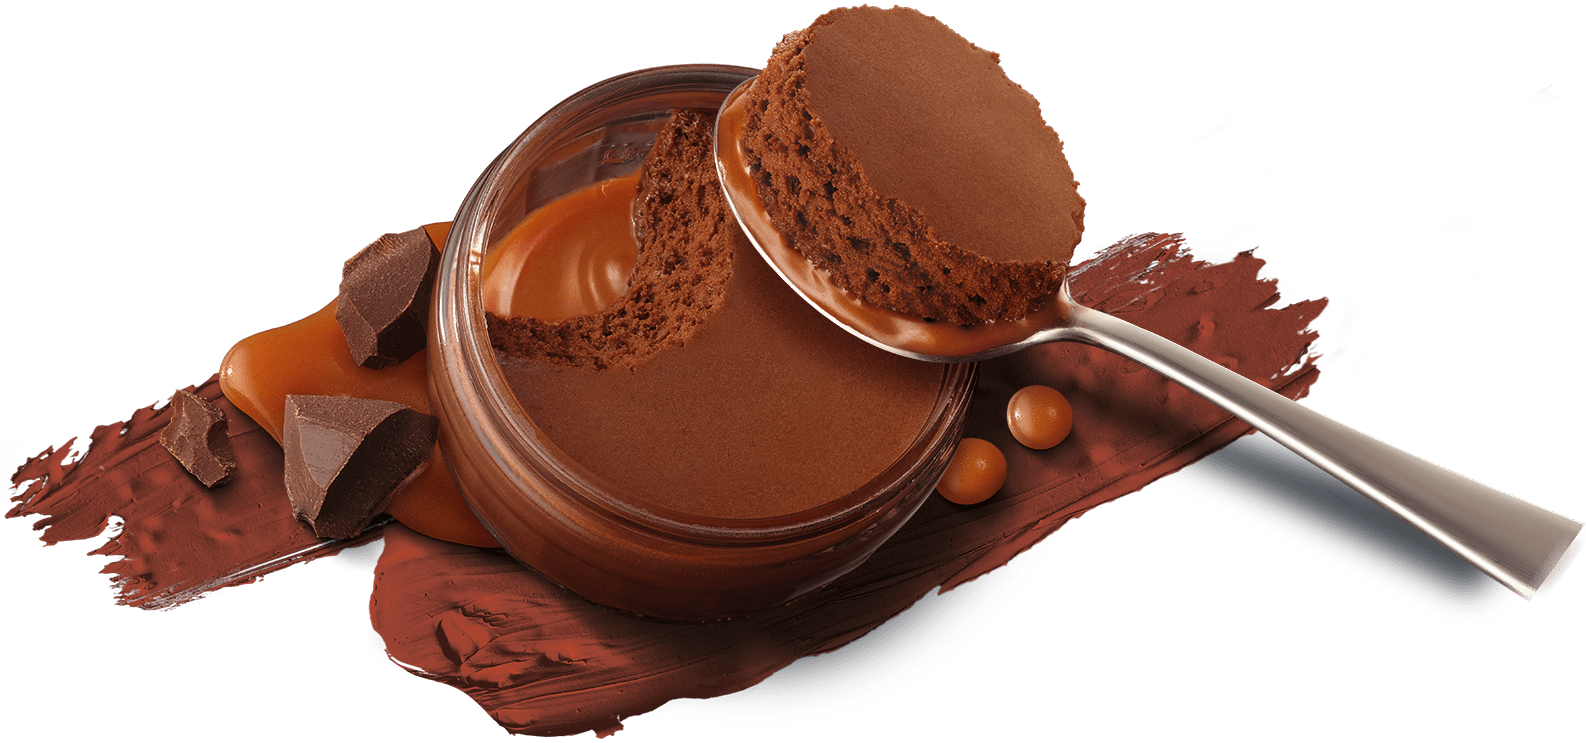 gu dark chocolate and salted caramel mousse